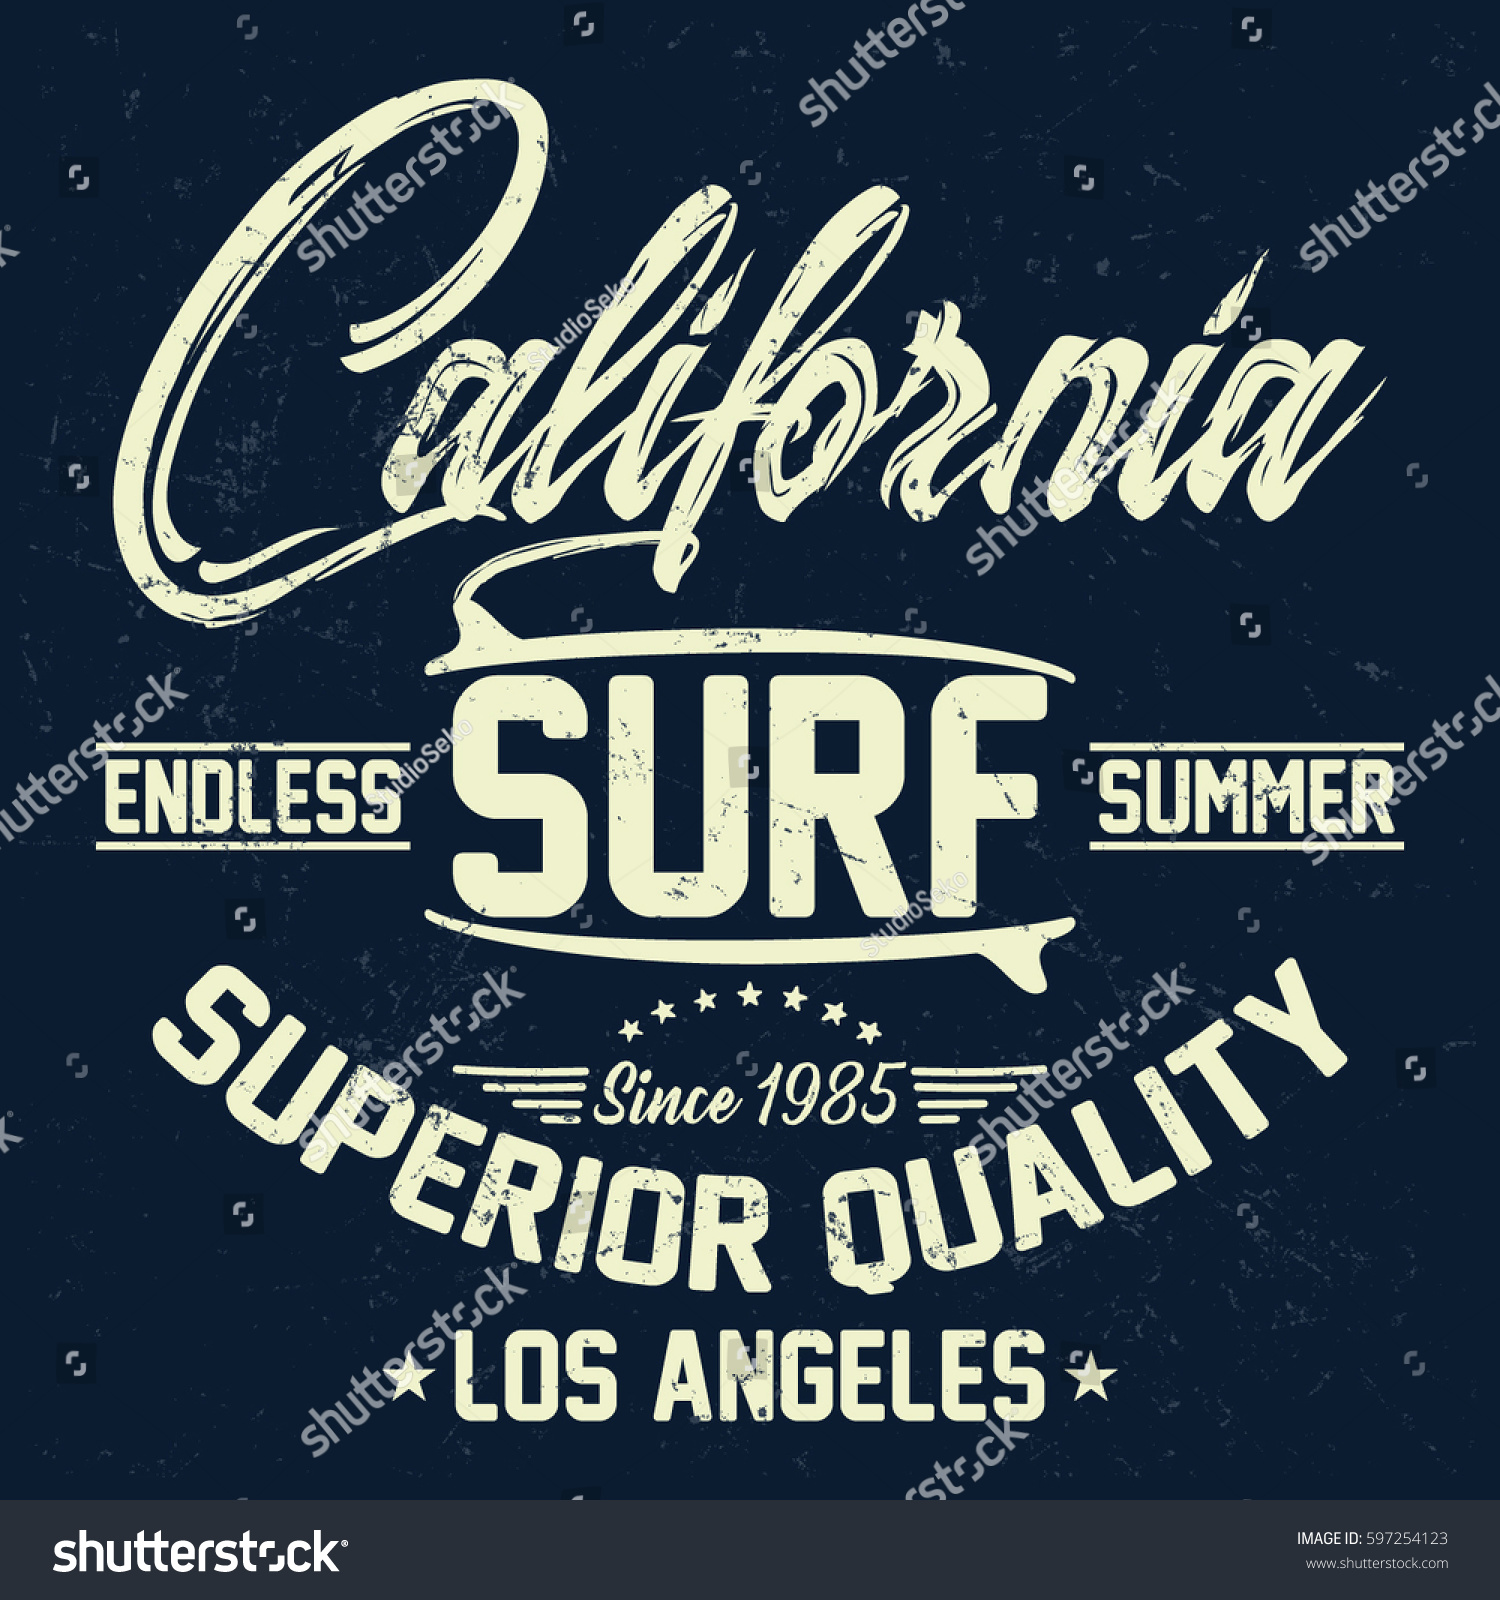 Download California Endless Summer Surf Typography Tshirt Stock Vector 597254123 - Shutterstock